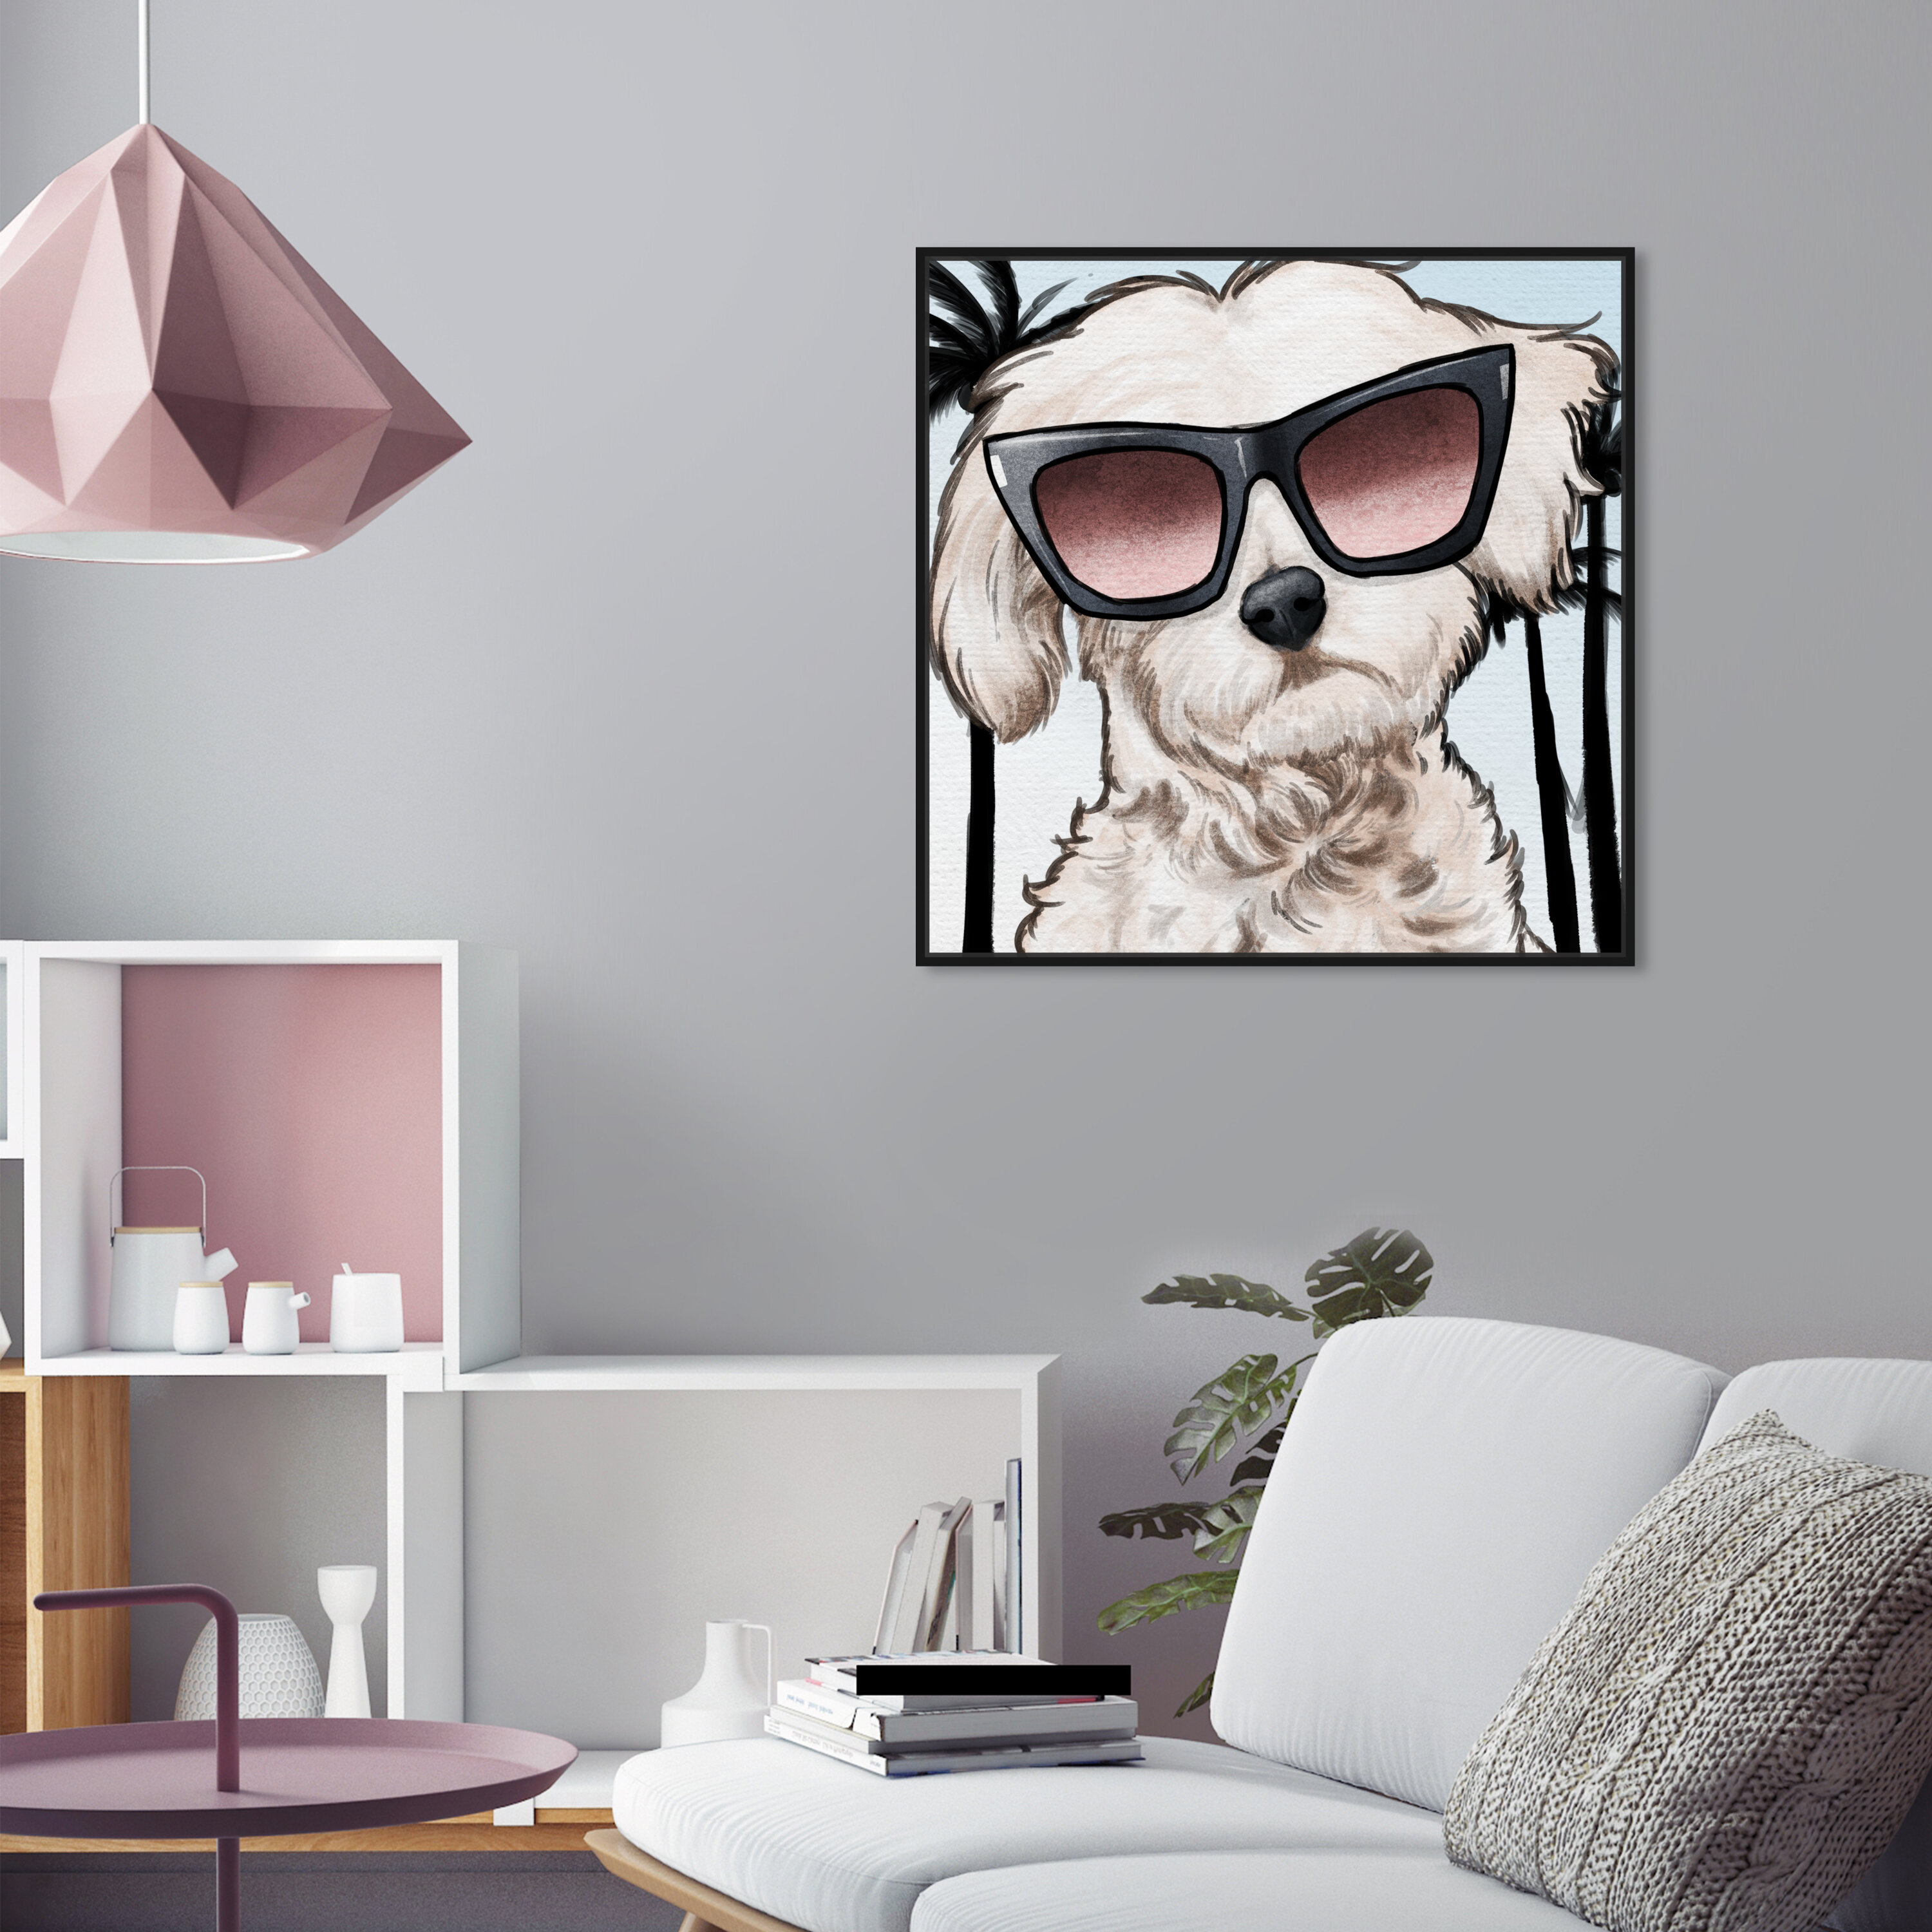 Buy Glam Room Decor - Chihuahua Decor - High Fashion Design Wall